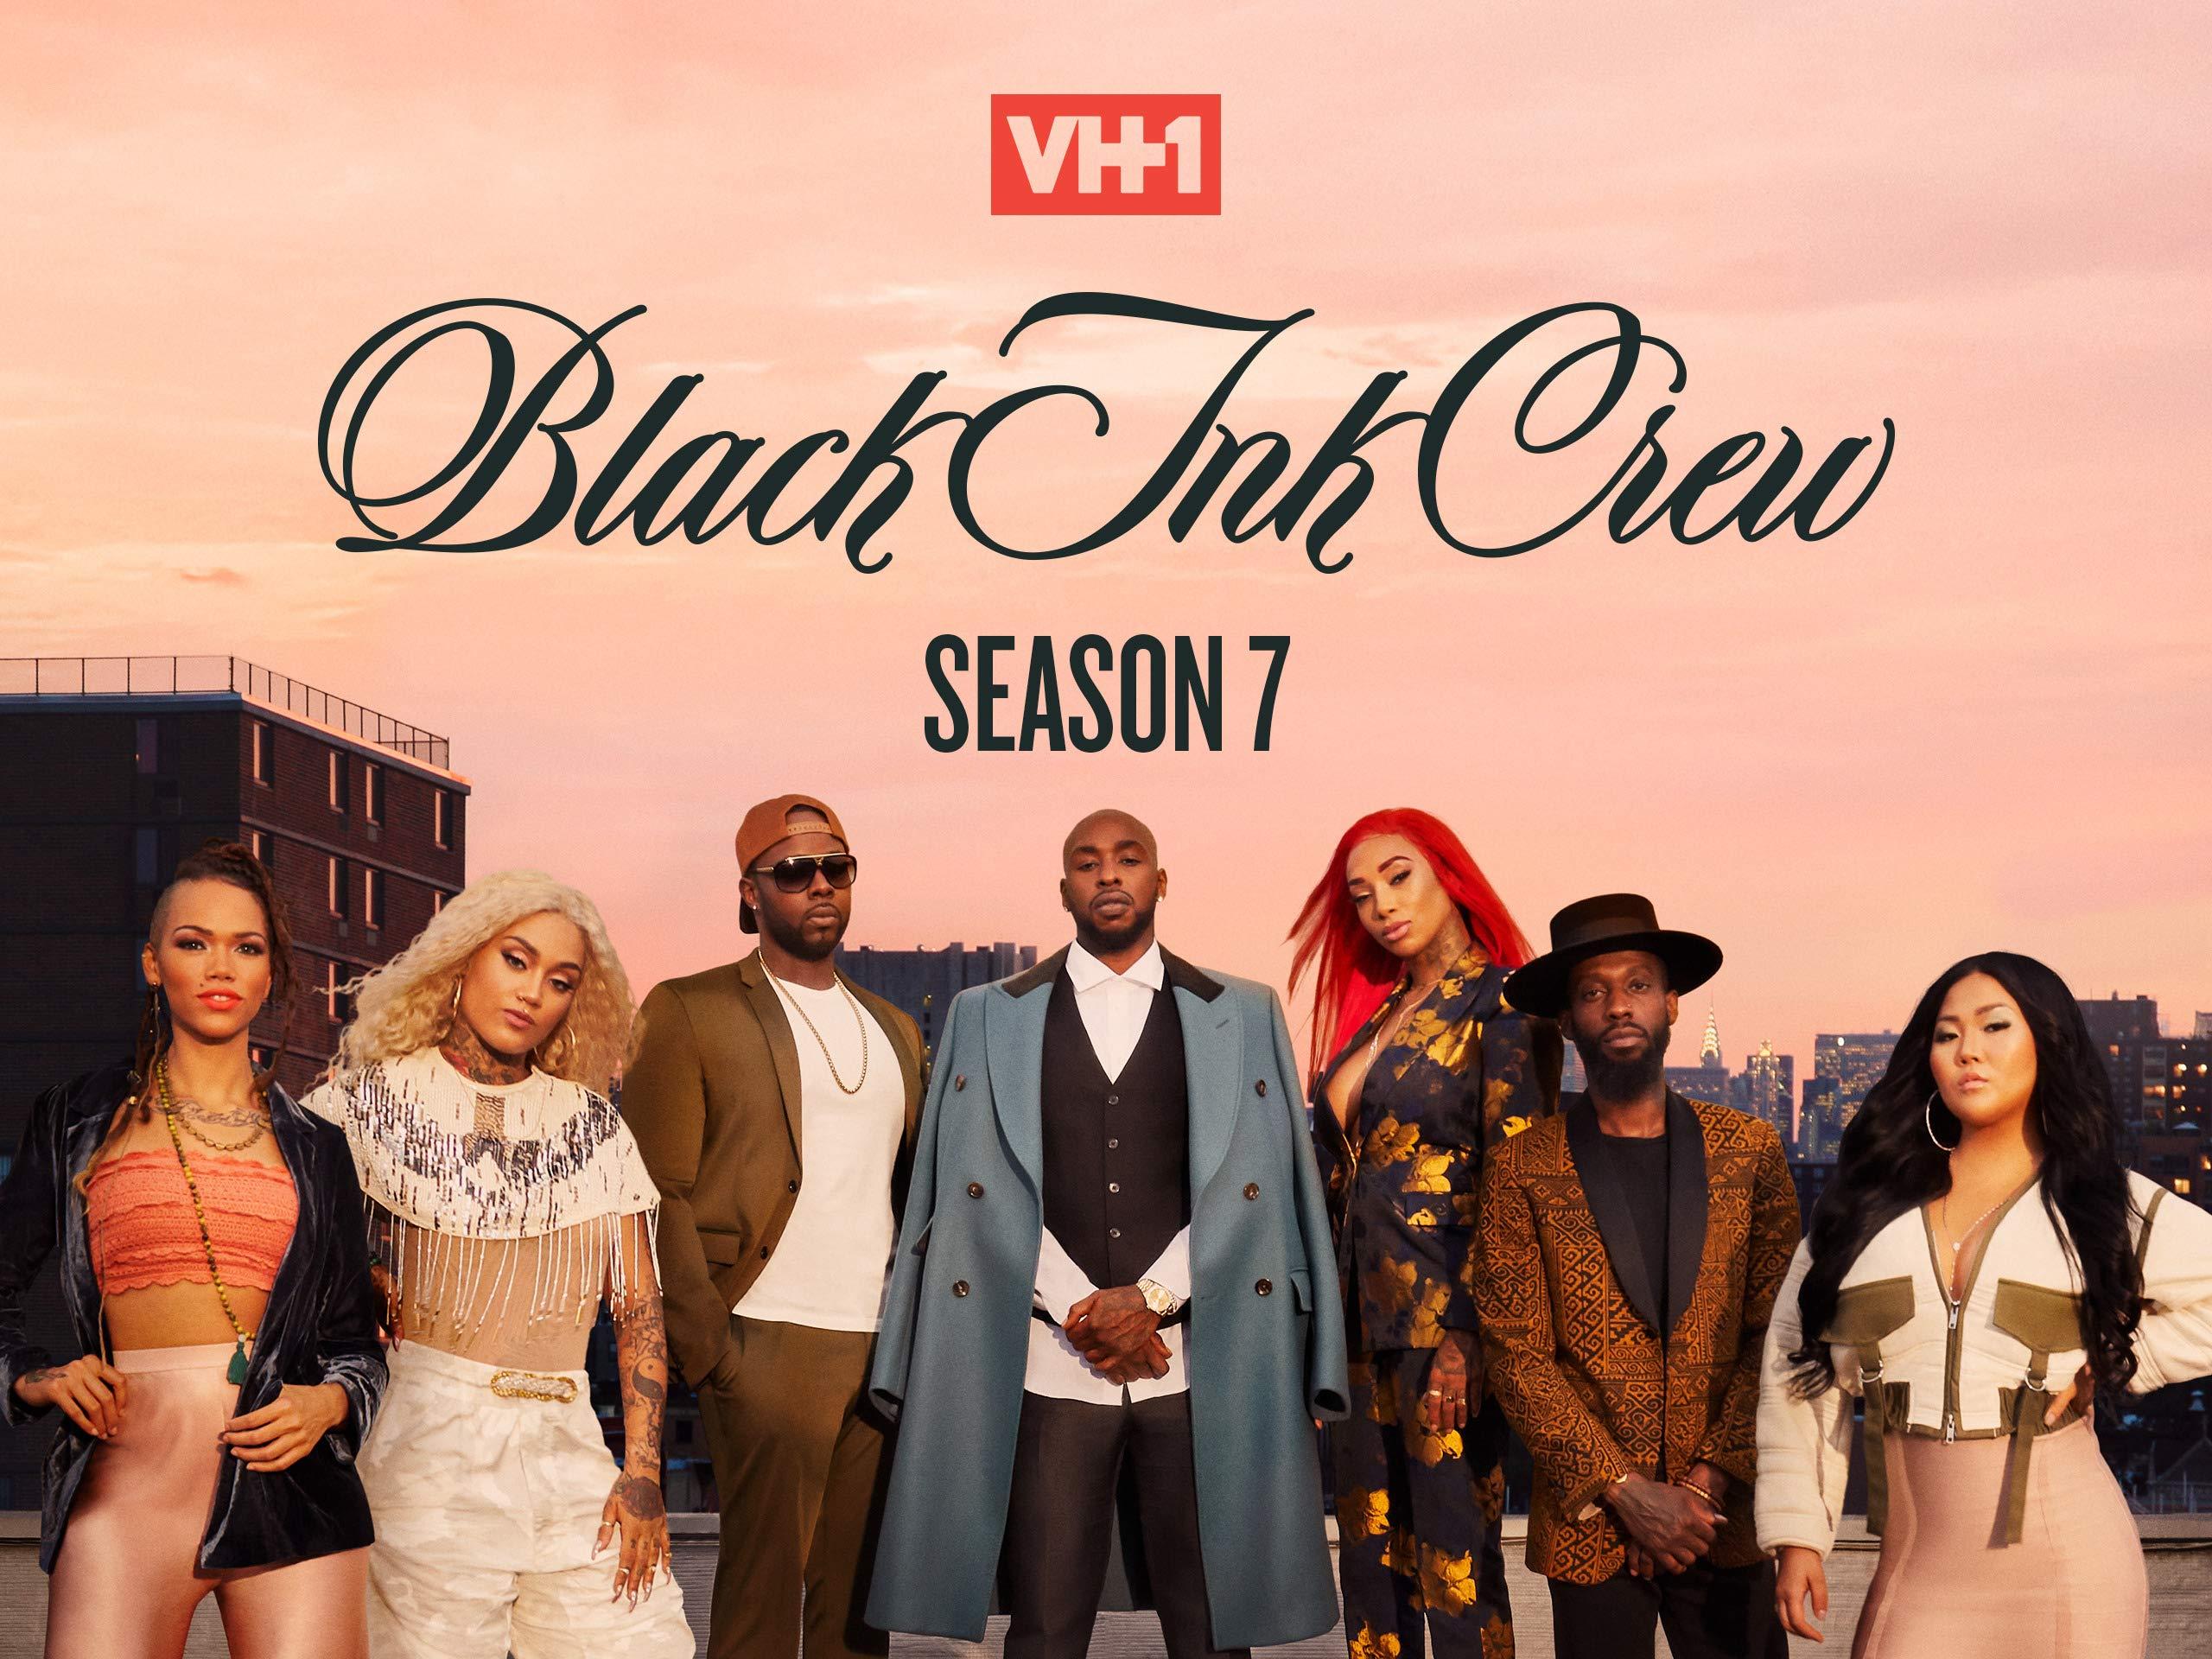 Black Ink Crew Season 7